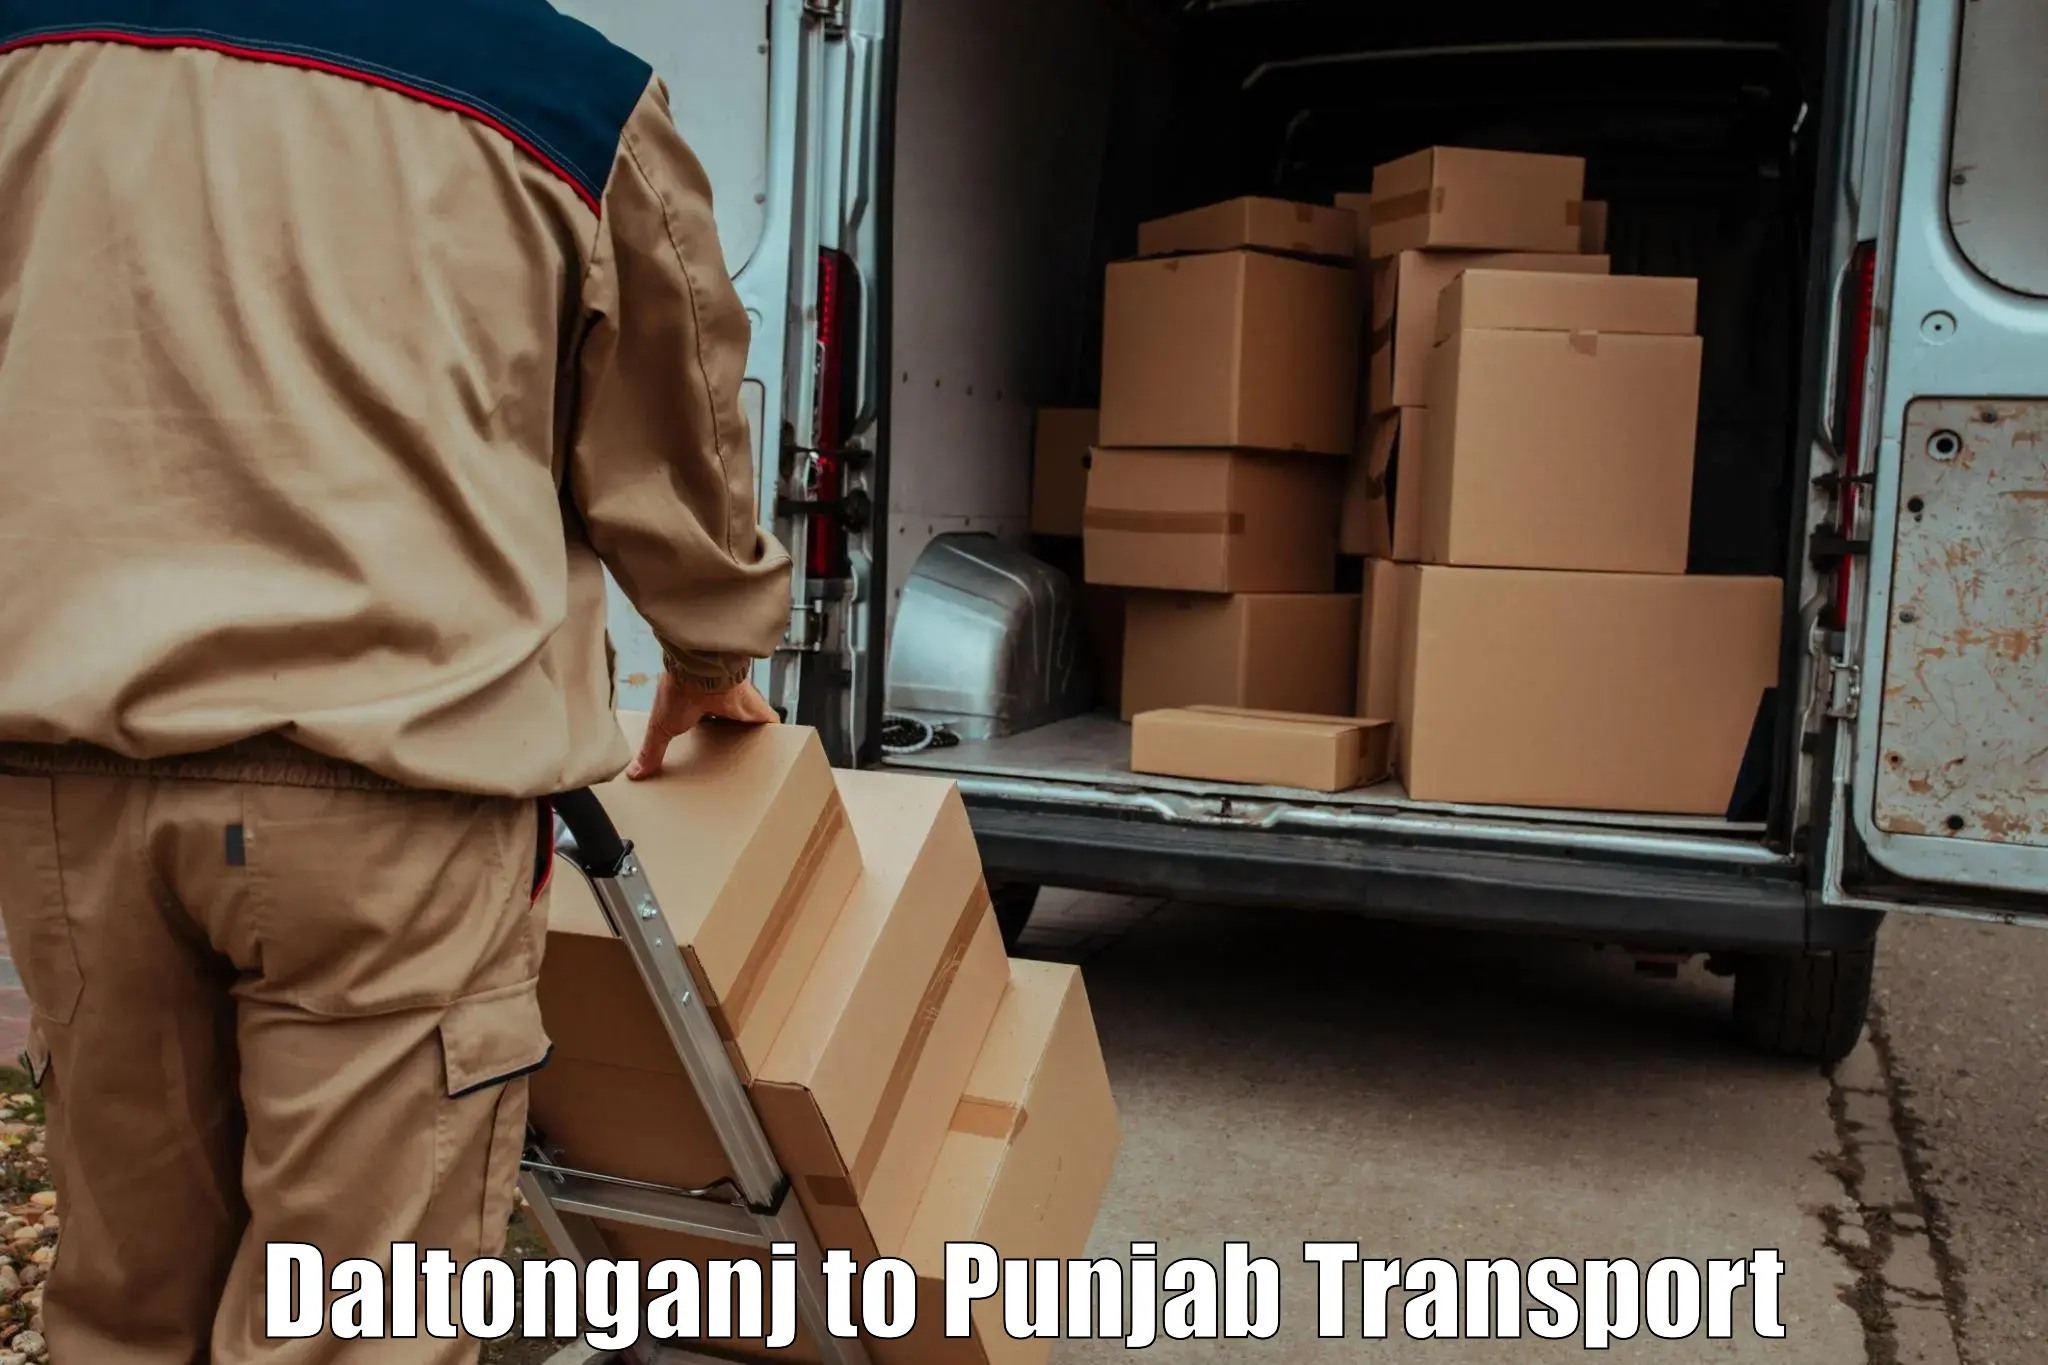 Transport shared services Daltonganj to Punjab